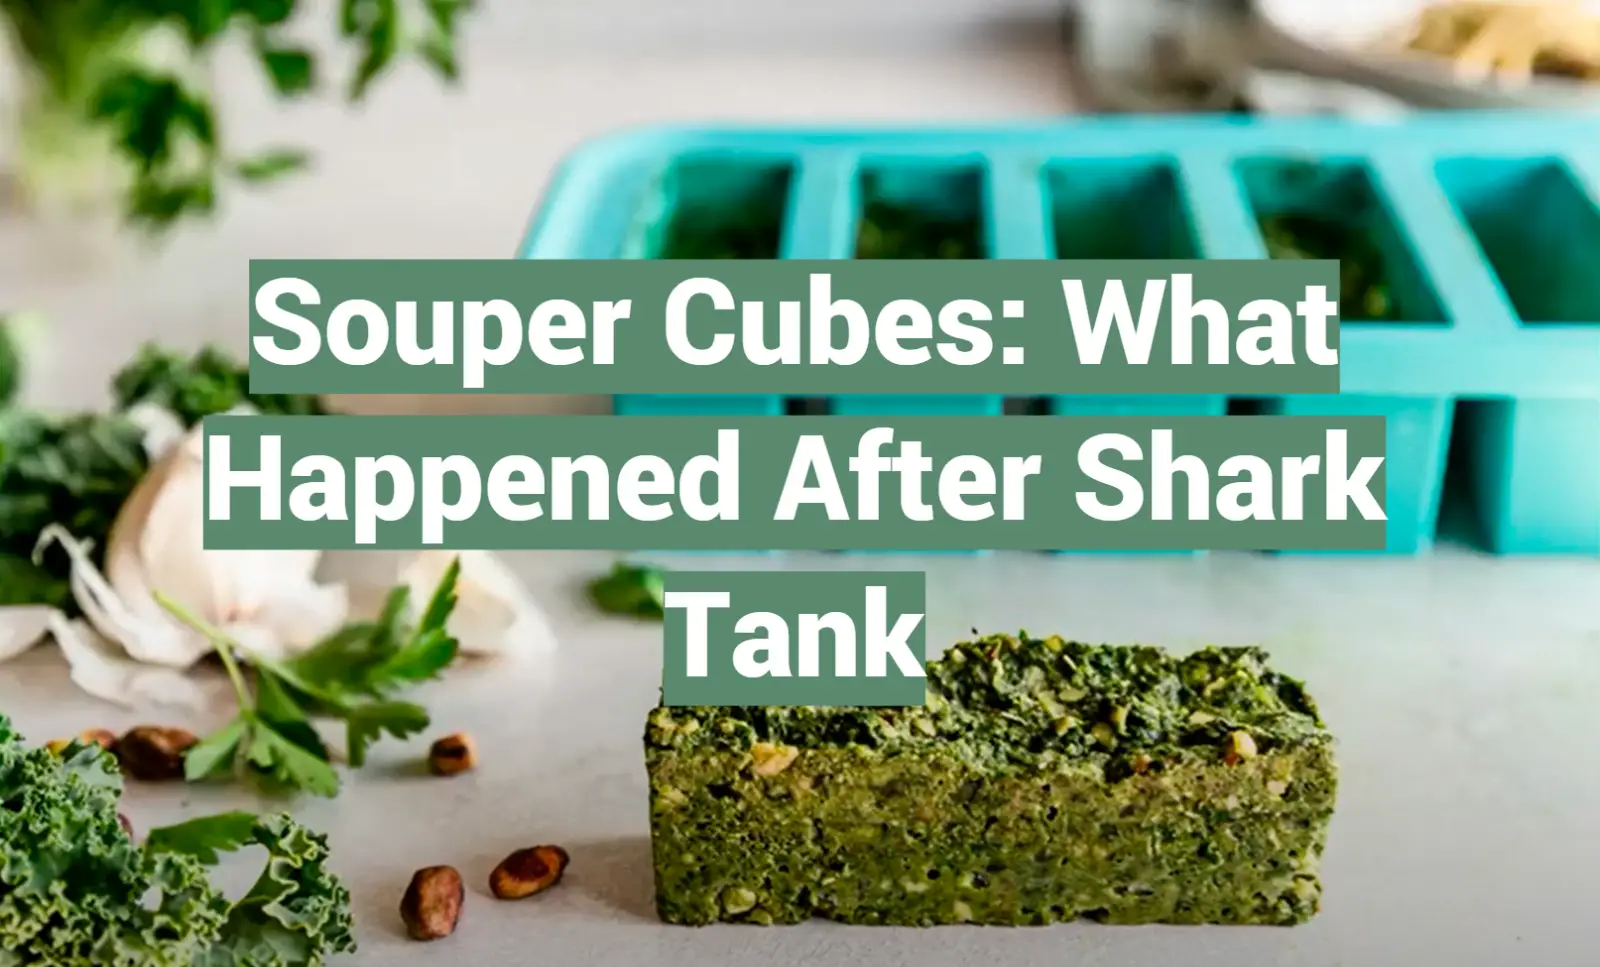 Souper Cubes: What Happened After Shark Tank